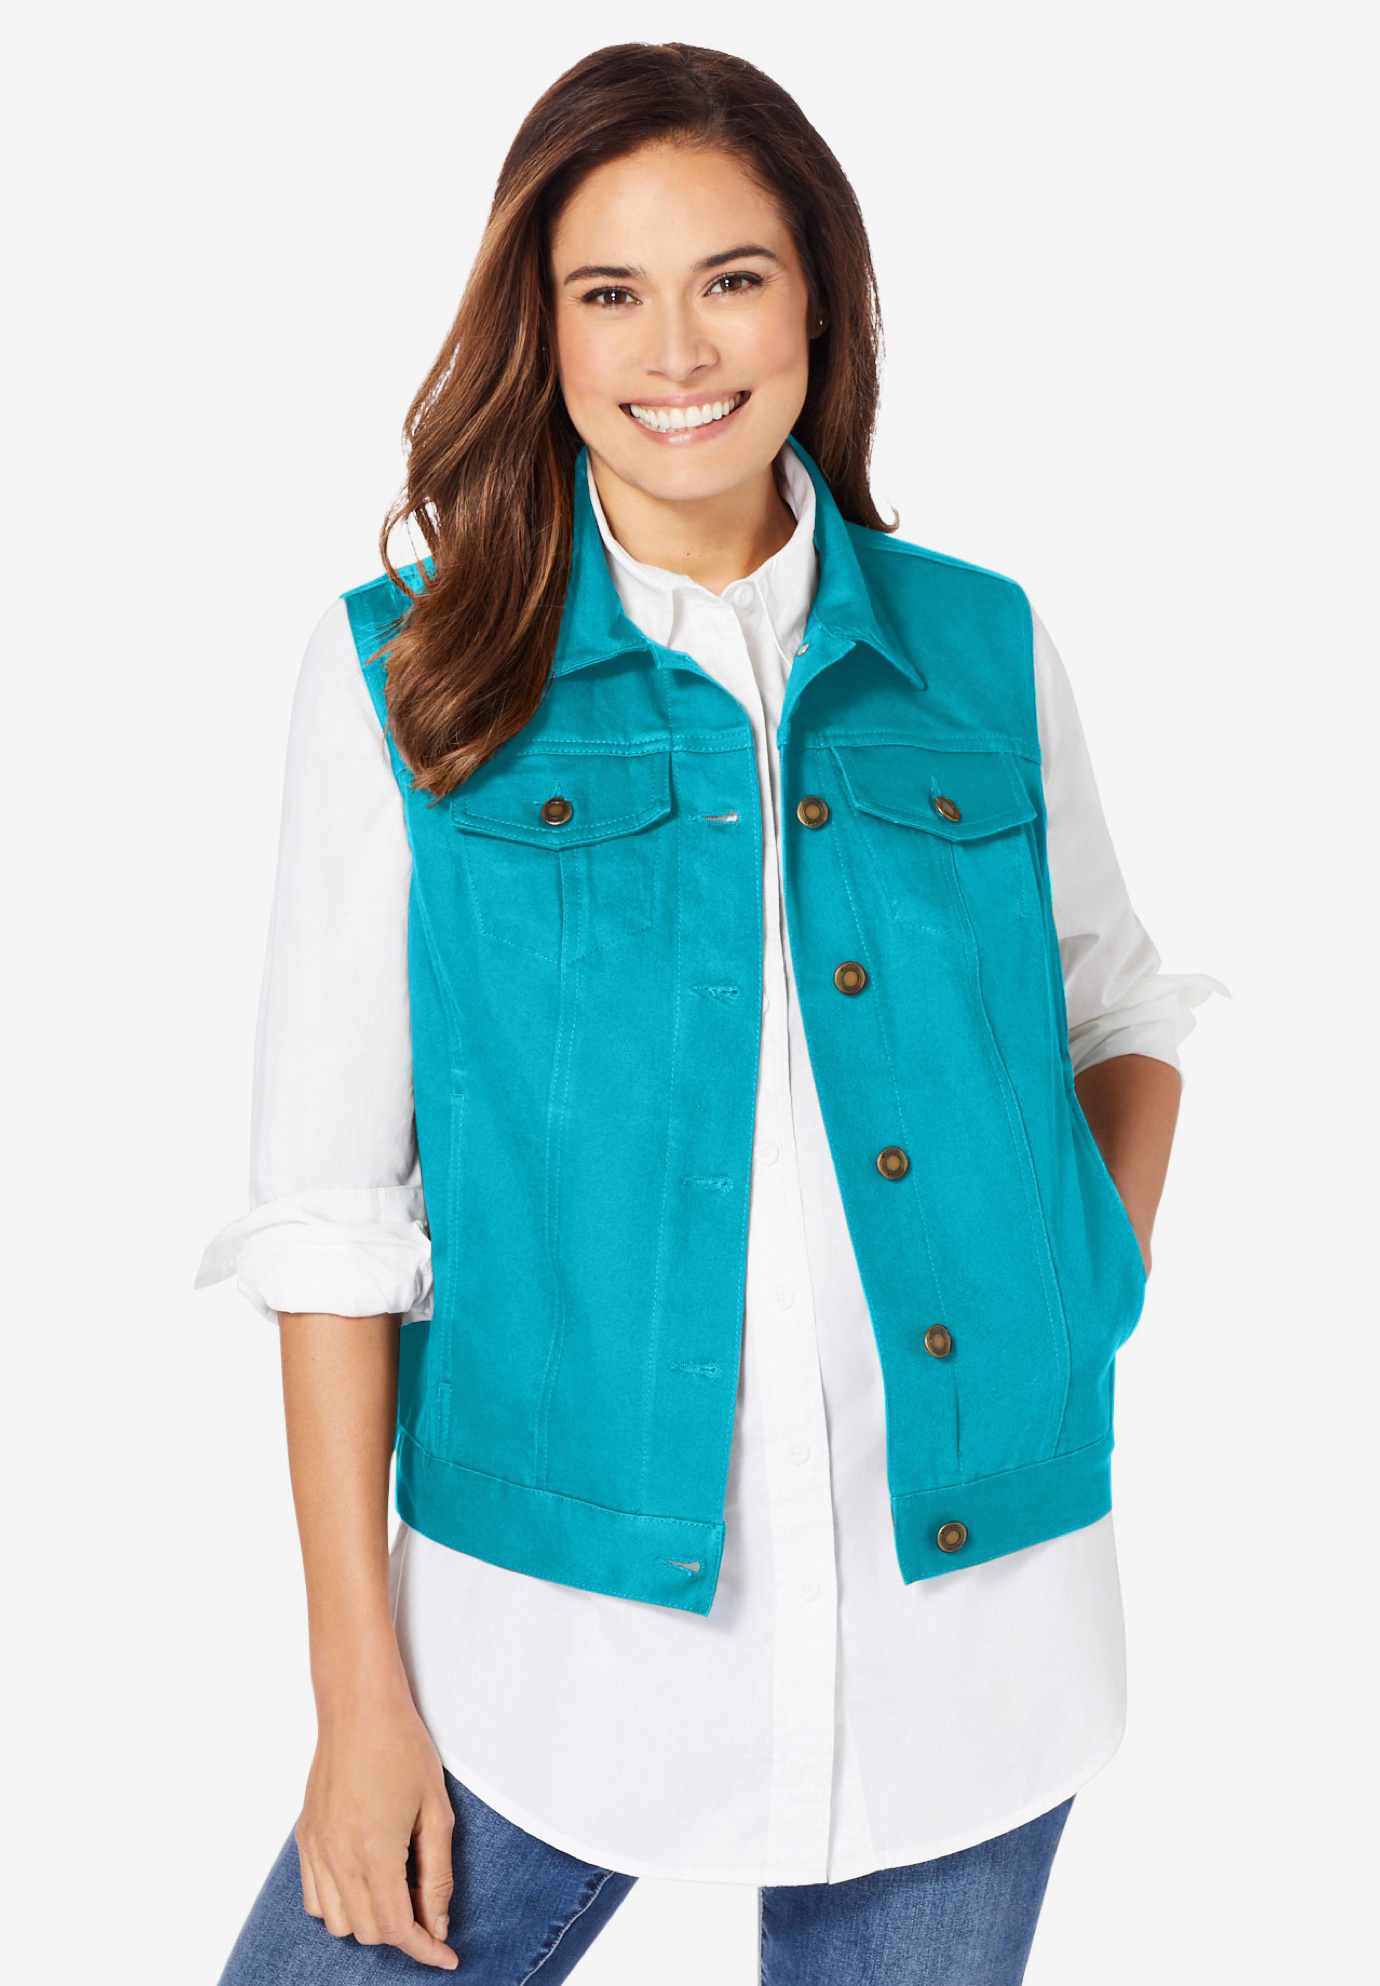 Blue Jean Vest Plus Size on Sale | bellvalefarms.com